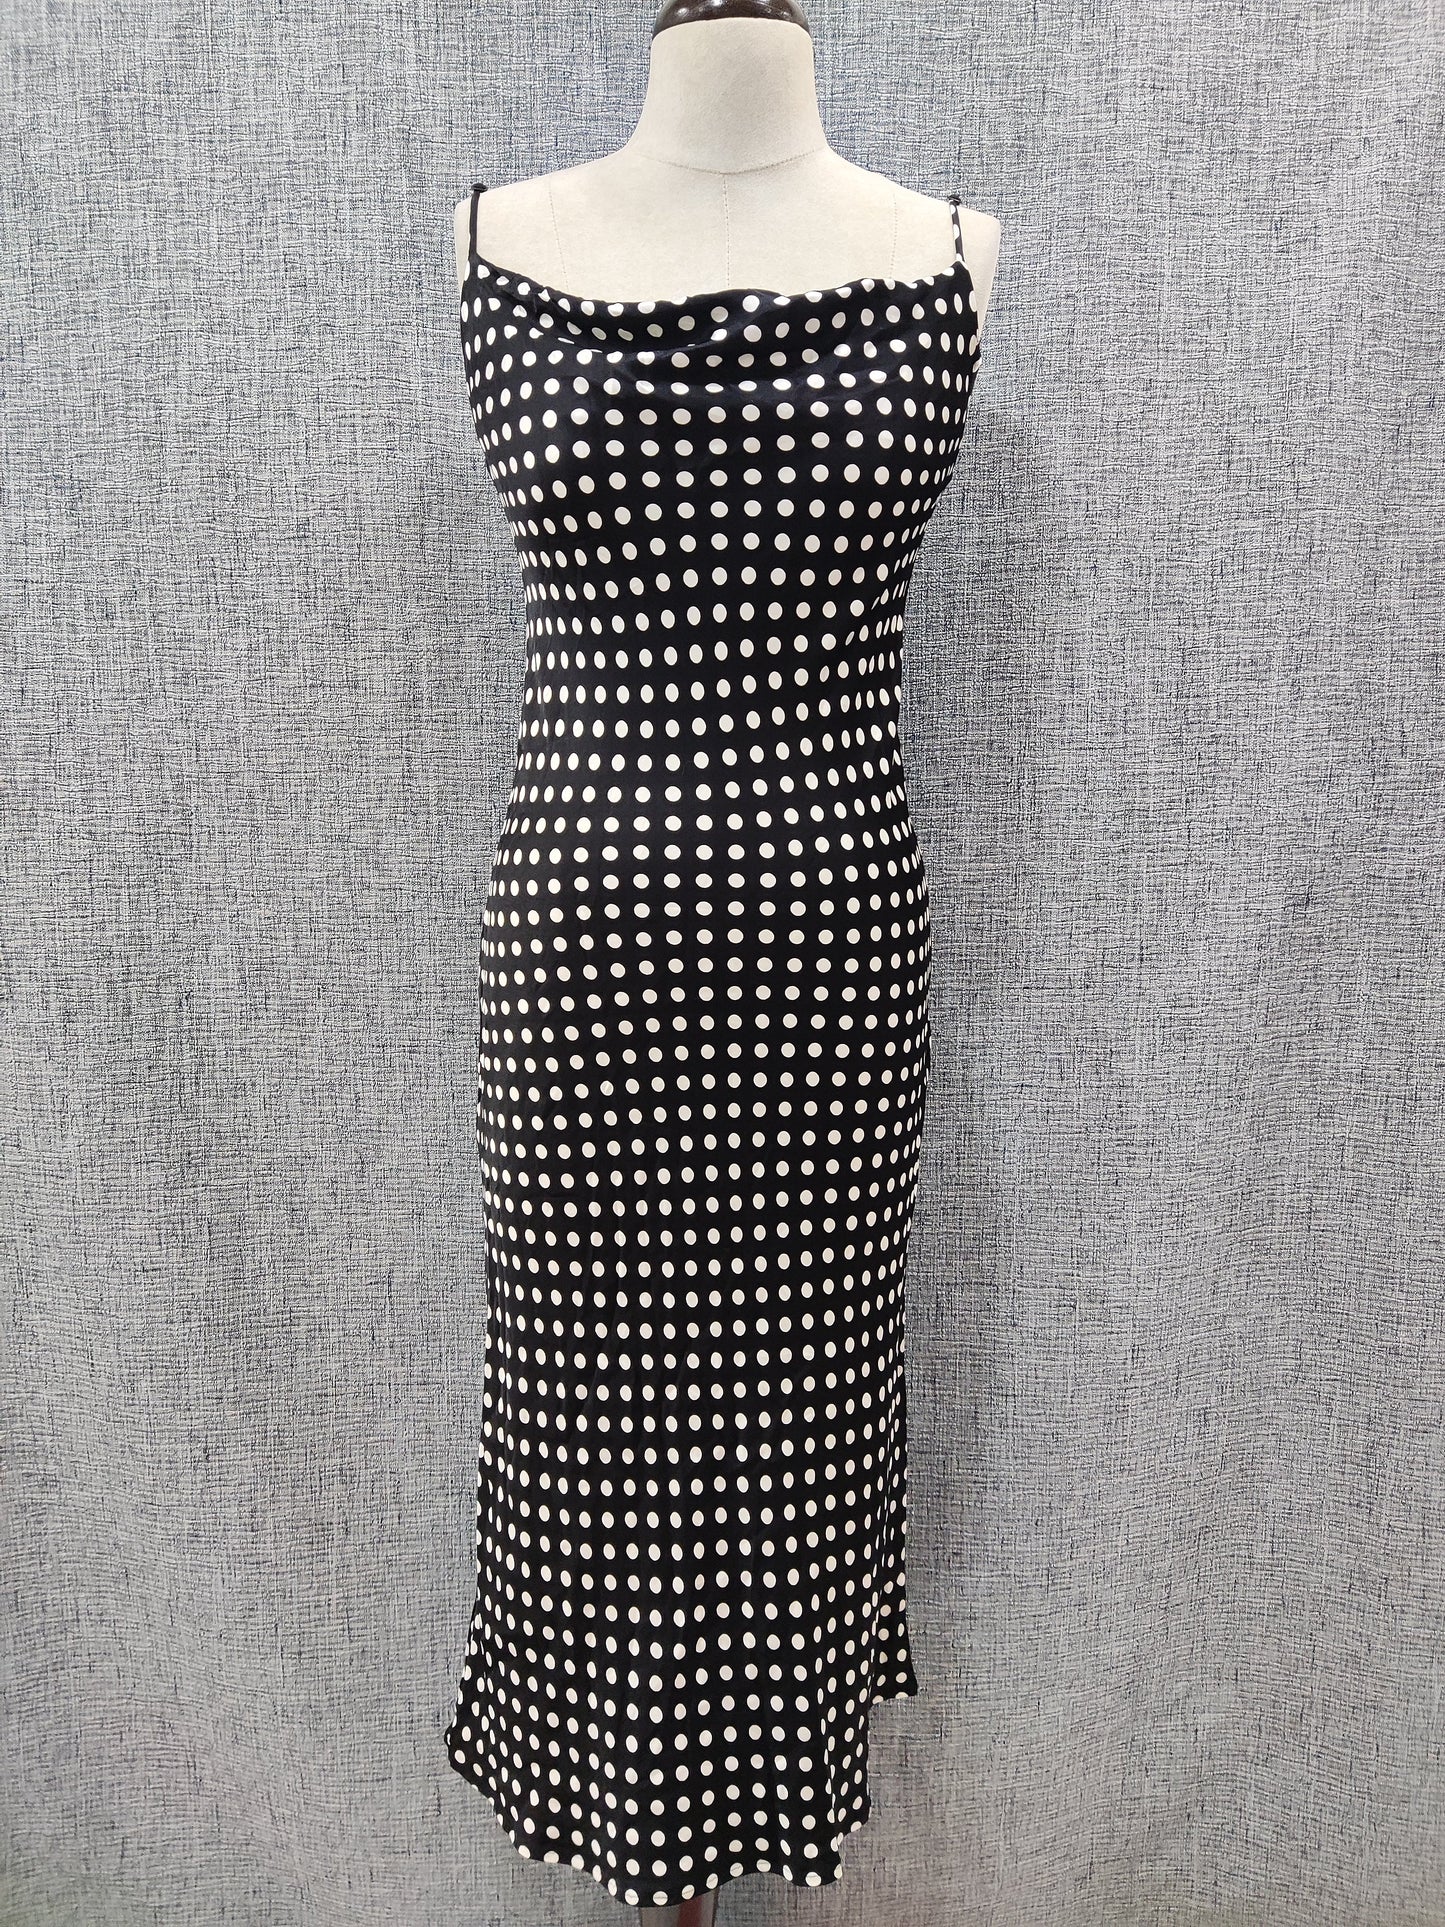 ZARA Black And White Polka Dots Strap Dress | Relove